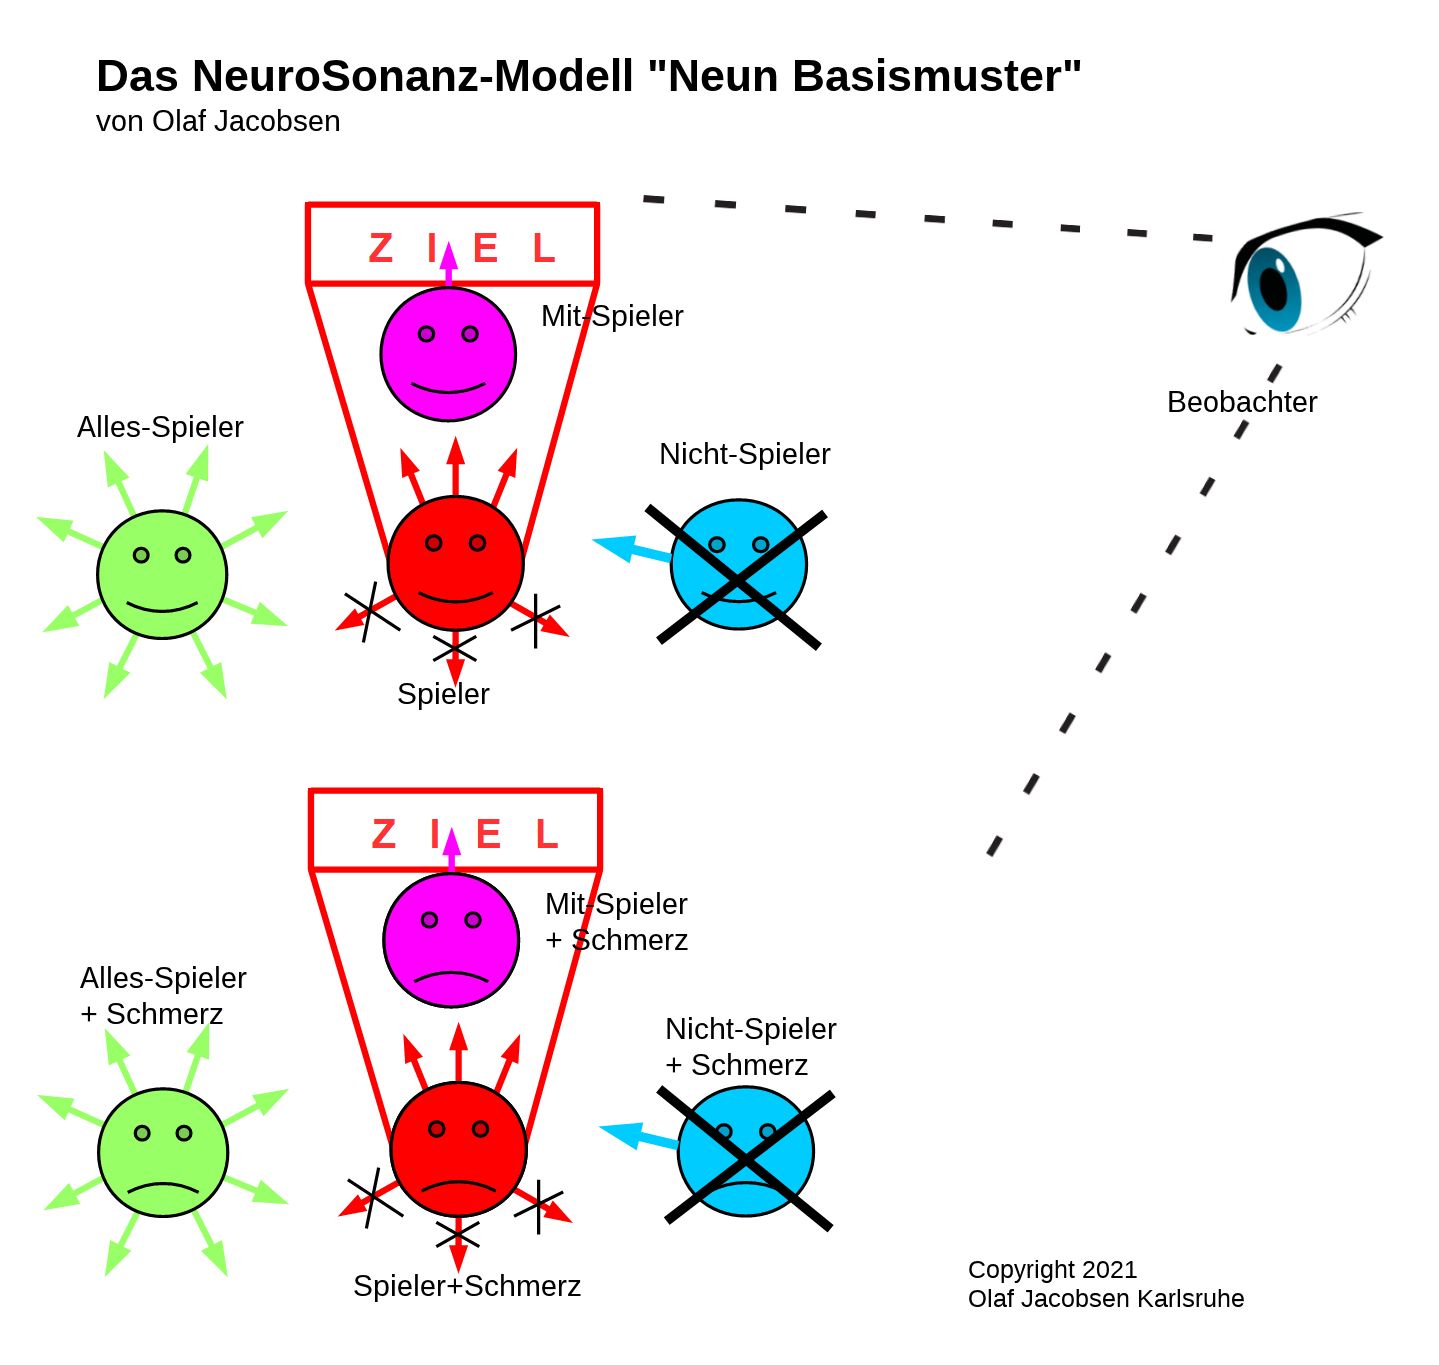 Das NeuroSonanz-Modell Neun Basismuster von Olaf Jacobsen